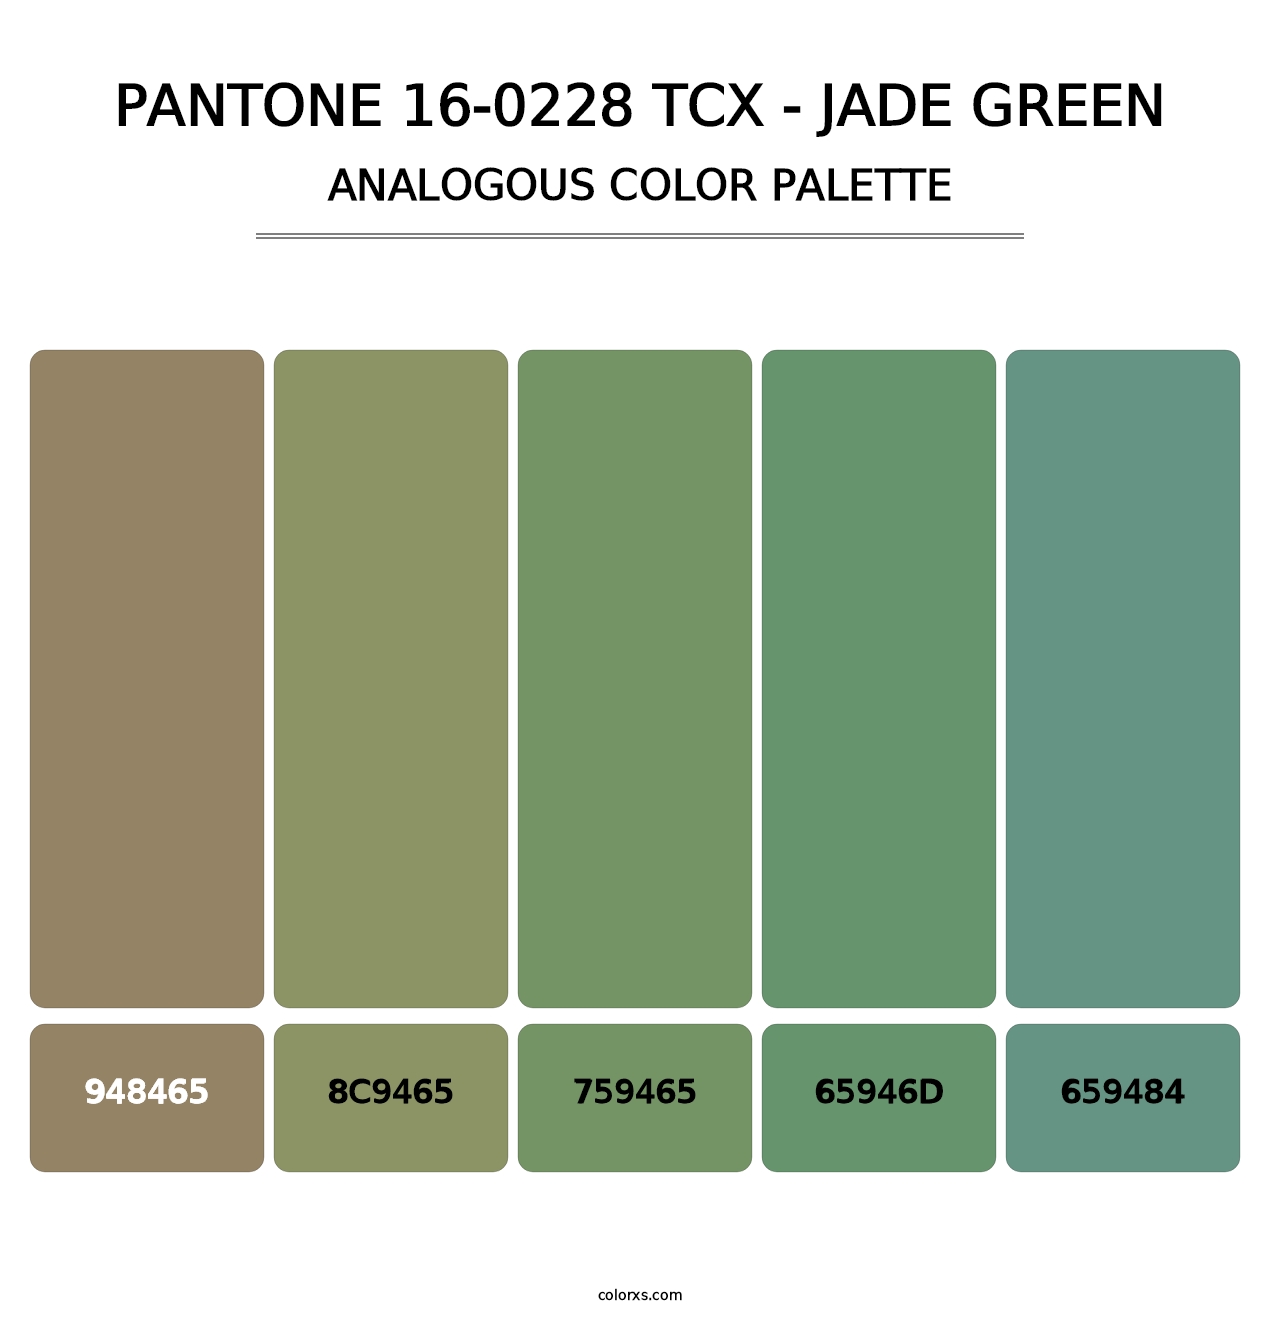 PANTONE 16-0228 TCX - Jade Green - Analogous Color Palette